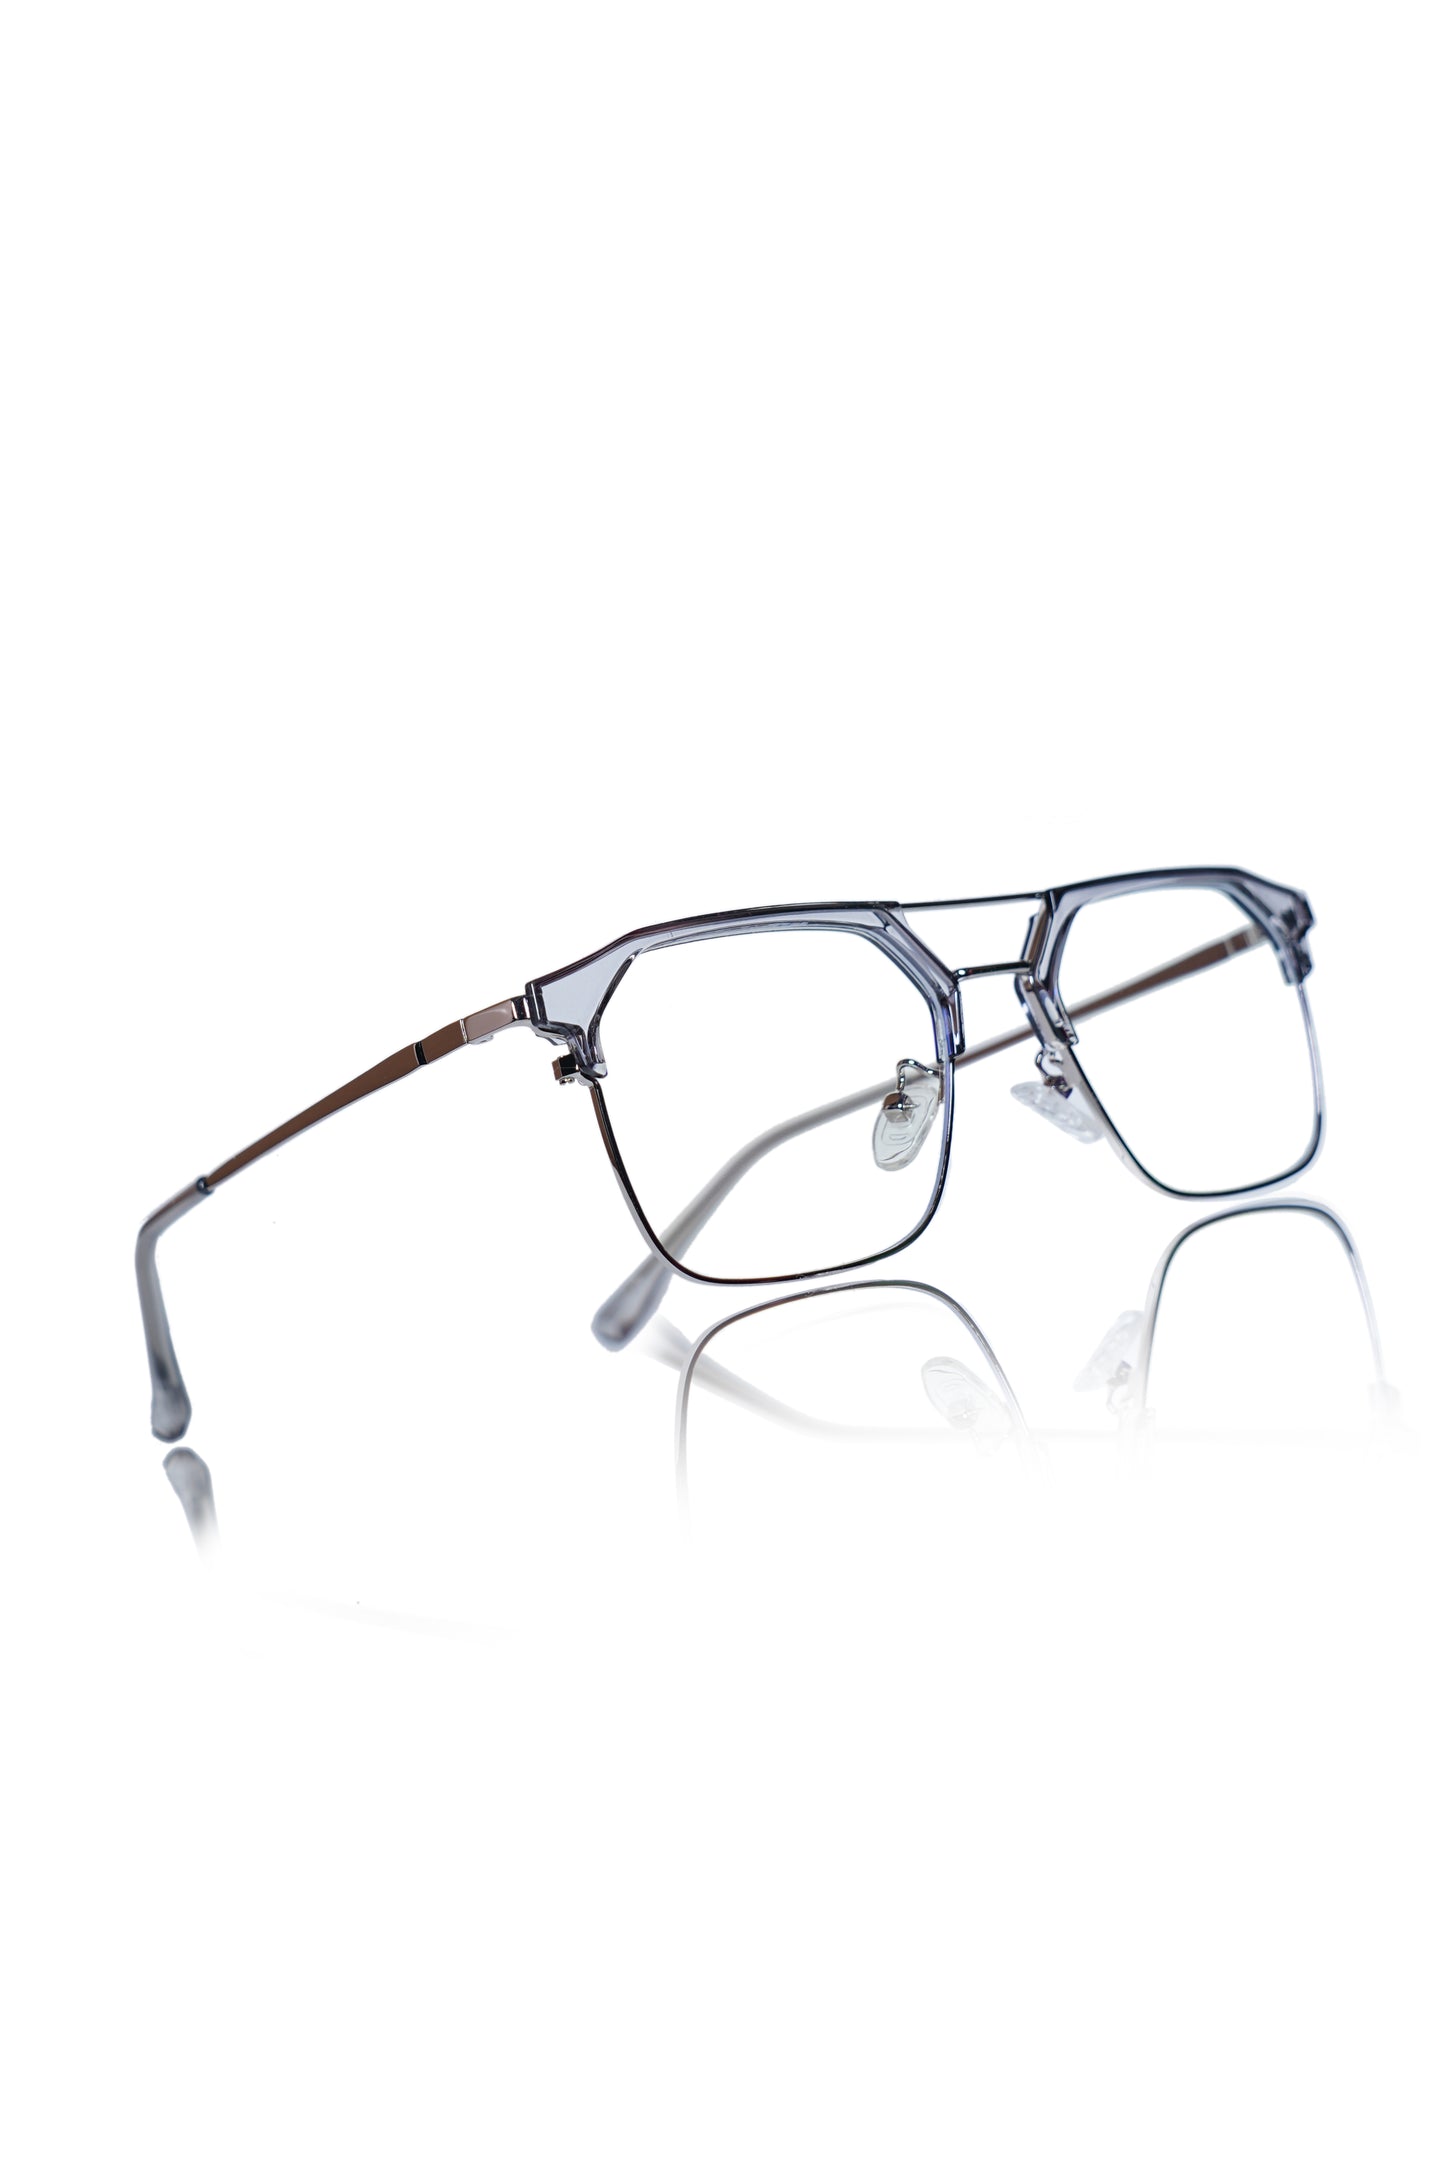 Jodykoes® Premium Series Classic Vintage Eyewear Eyeglasses Spectacles with Blue Light Anti Glare Glasses Frame for Men and Women (Transparent)